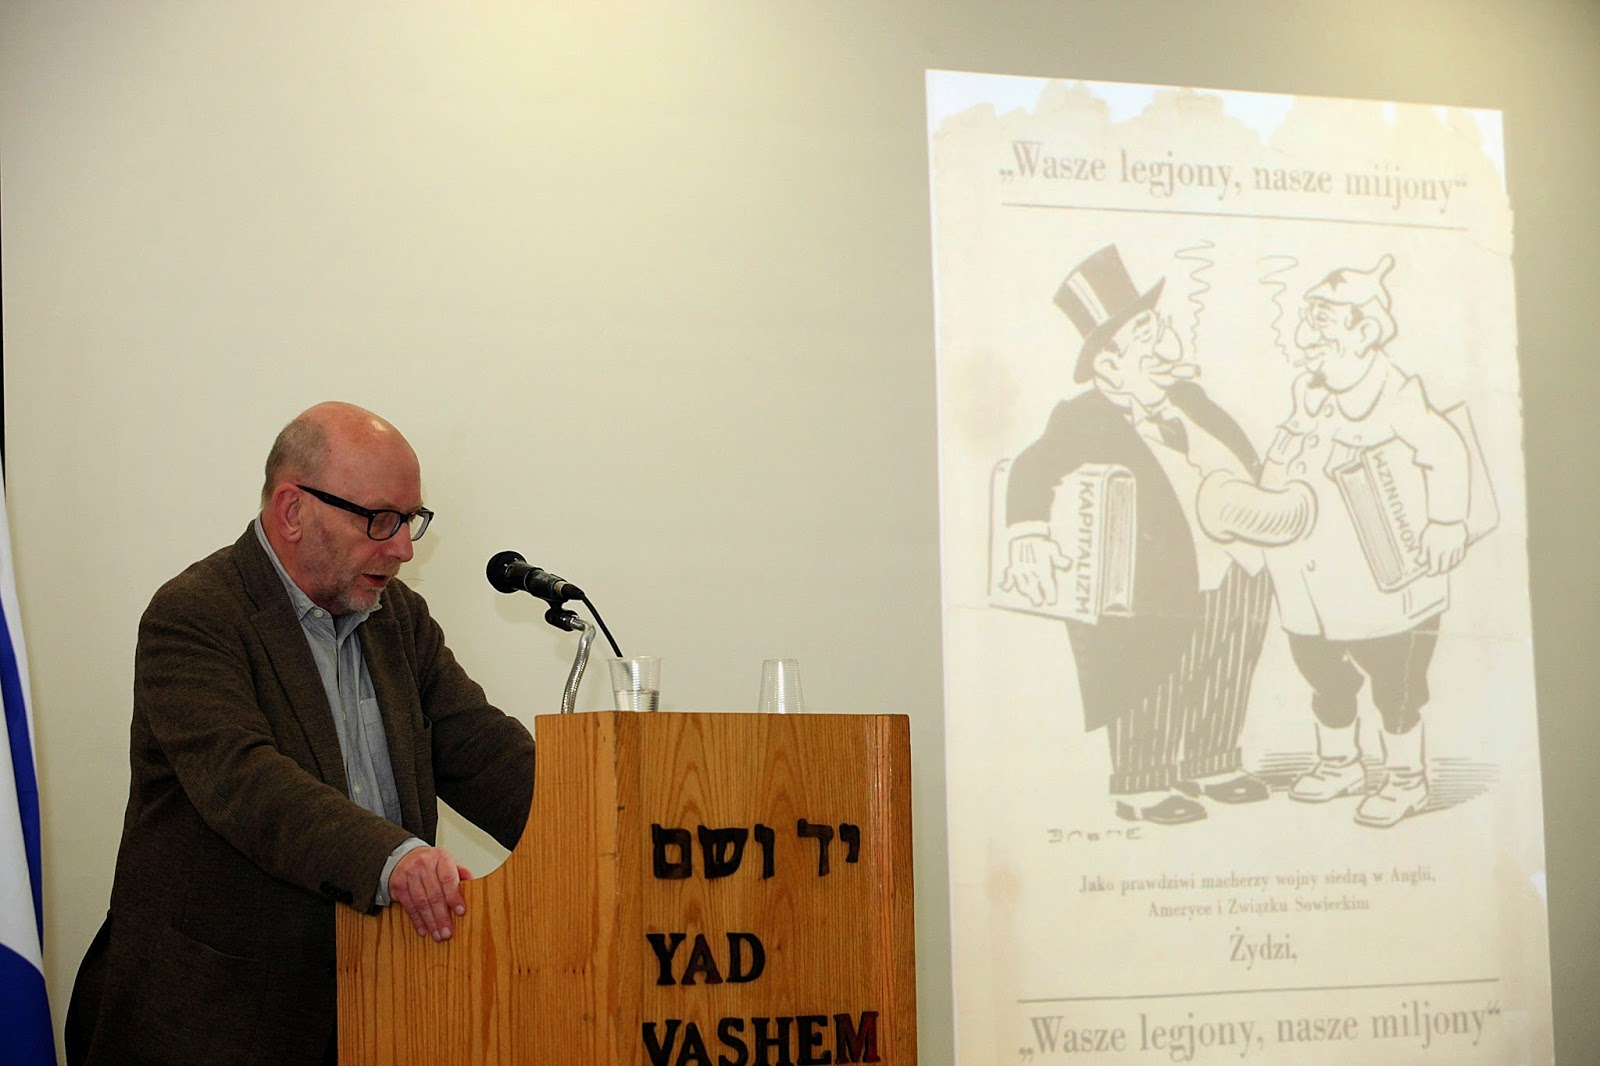 Symposium Sheds Light on Myth of "Judeo-Bolshevism"